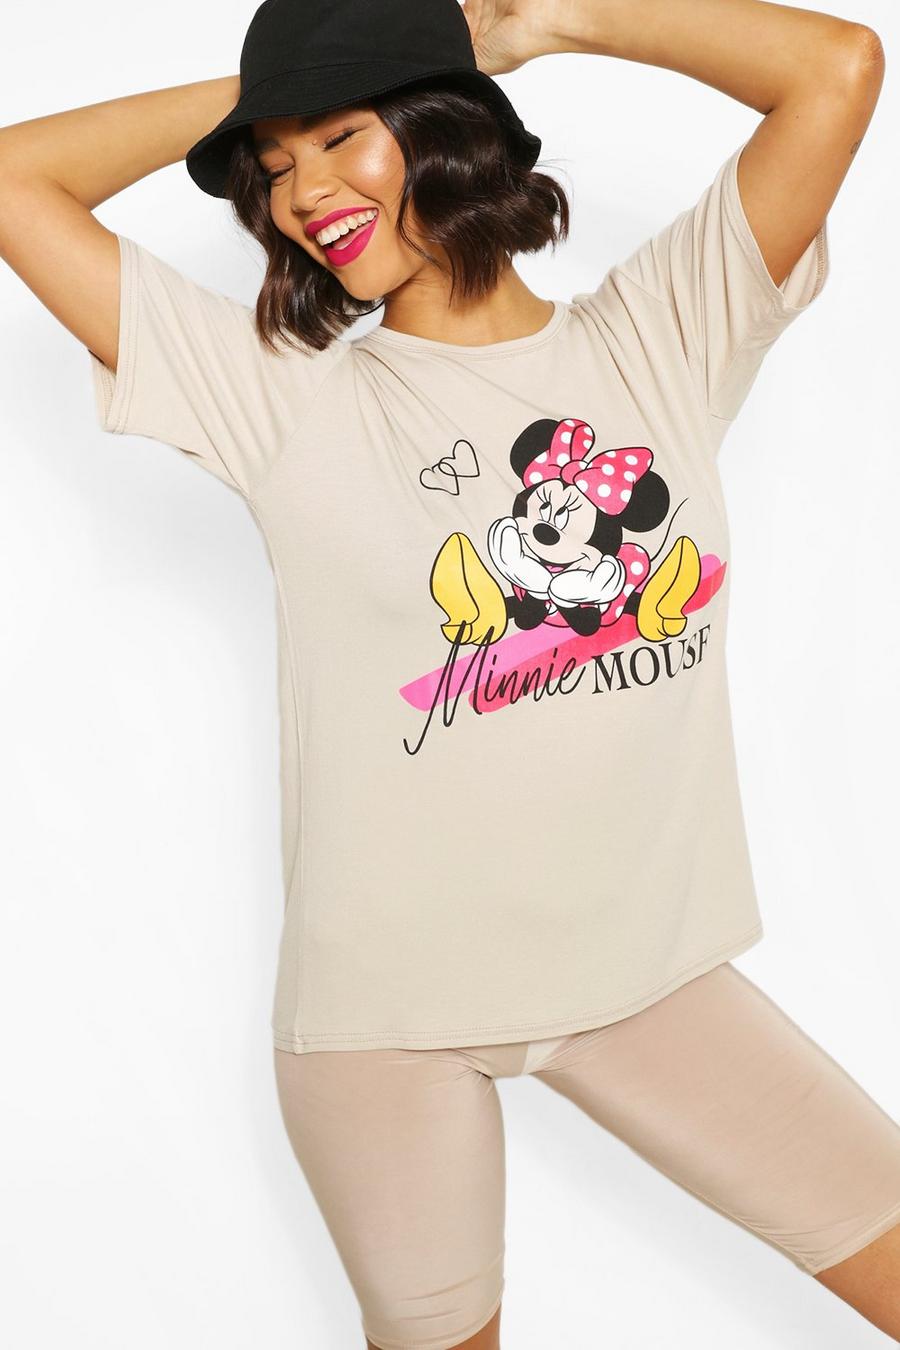 Camiseta de Minnie de Disney image number 1